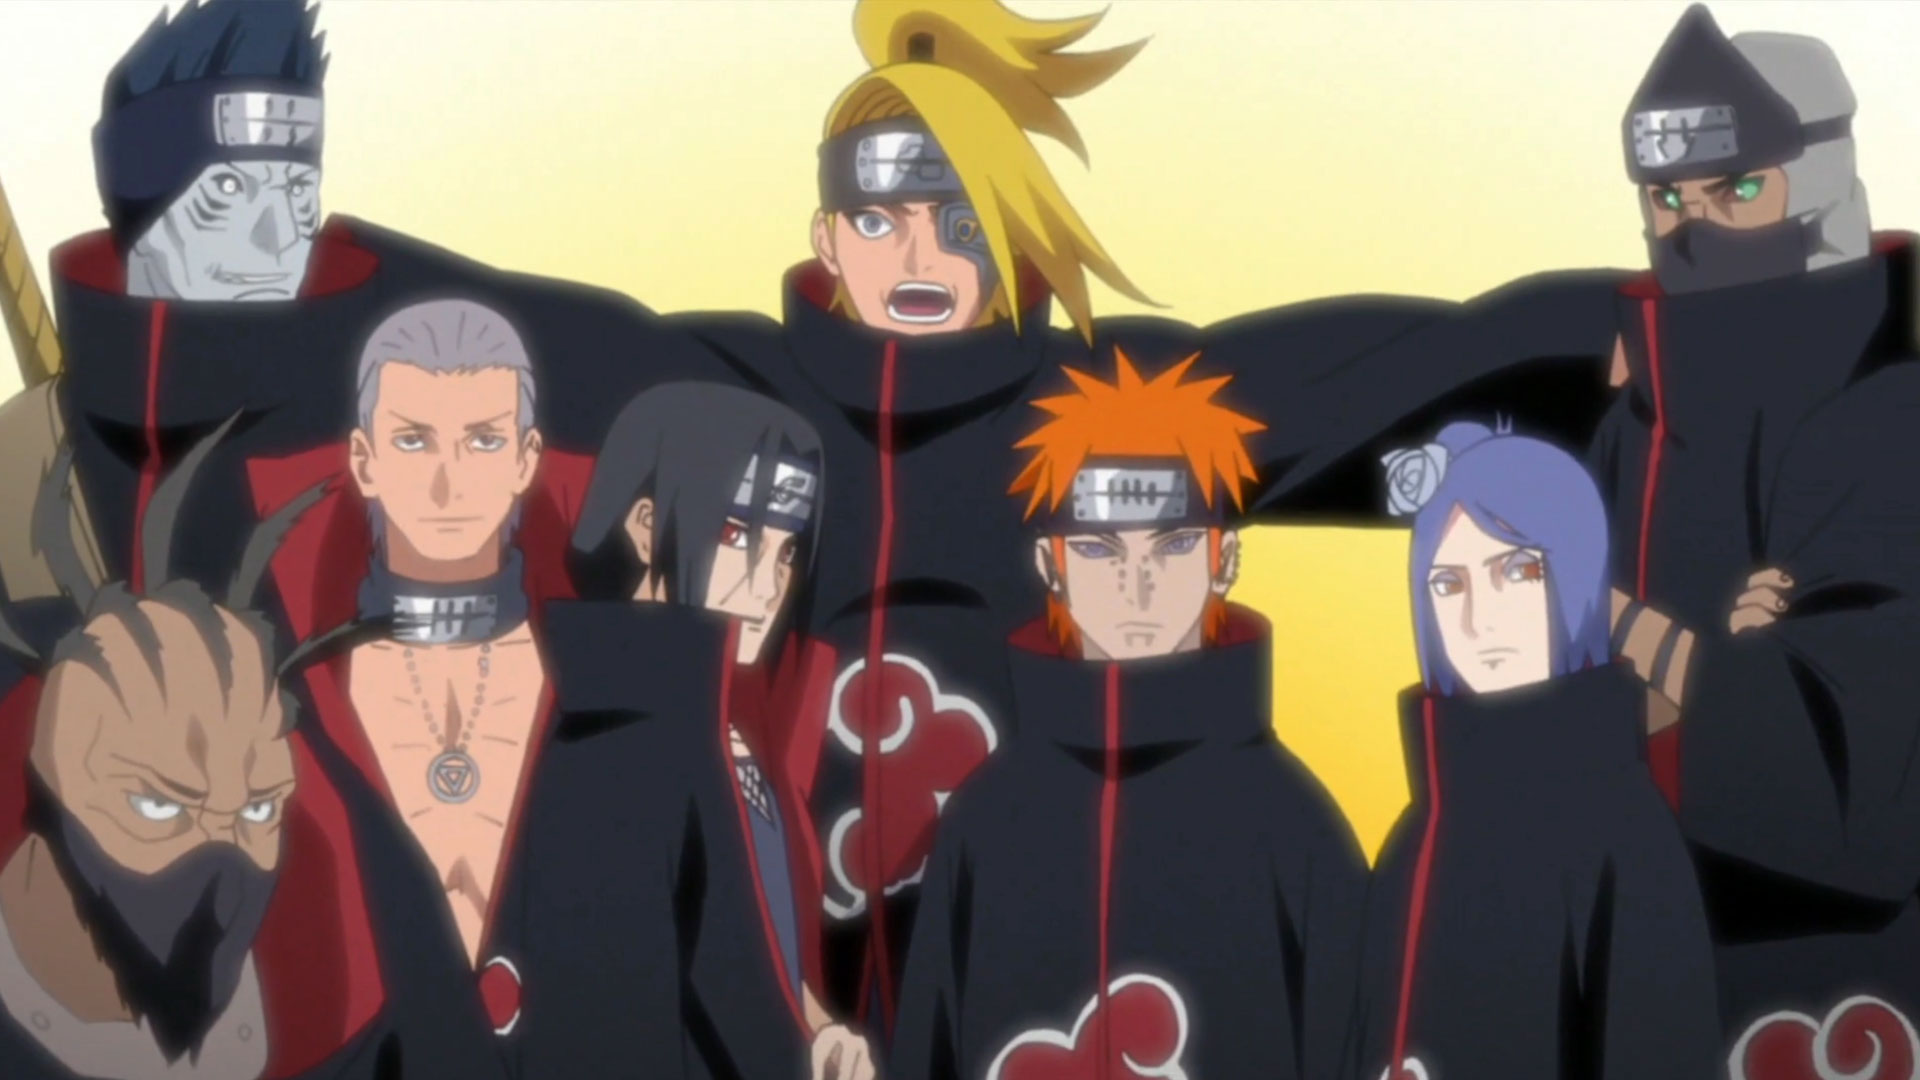 Akatsuki Members in Naruto, Ranked by Strength